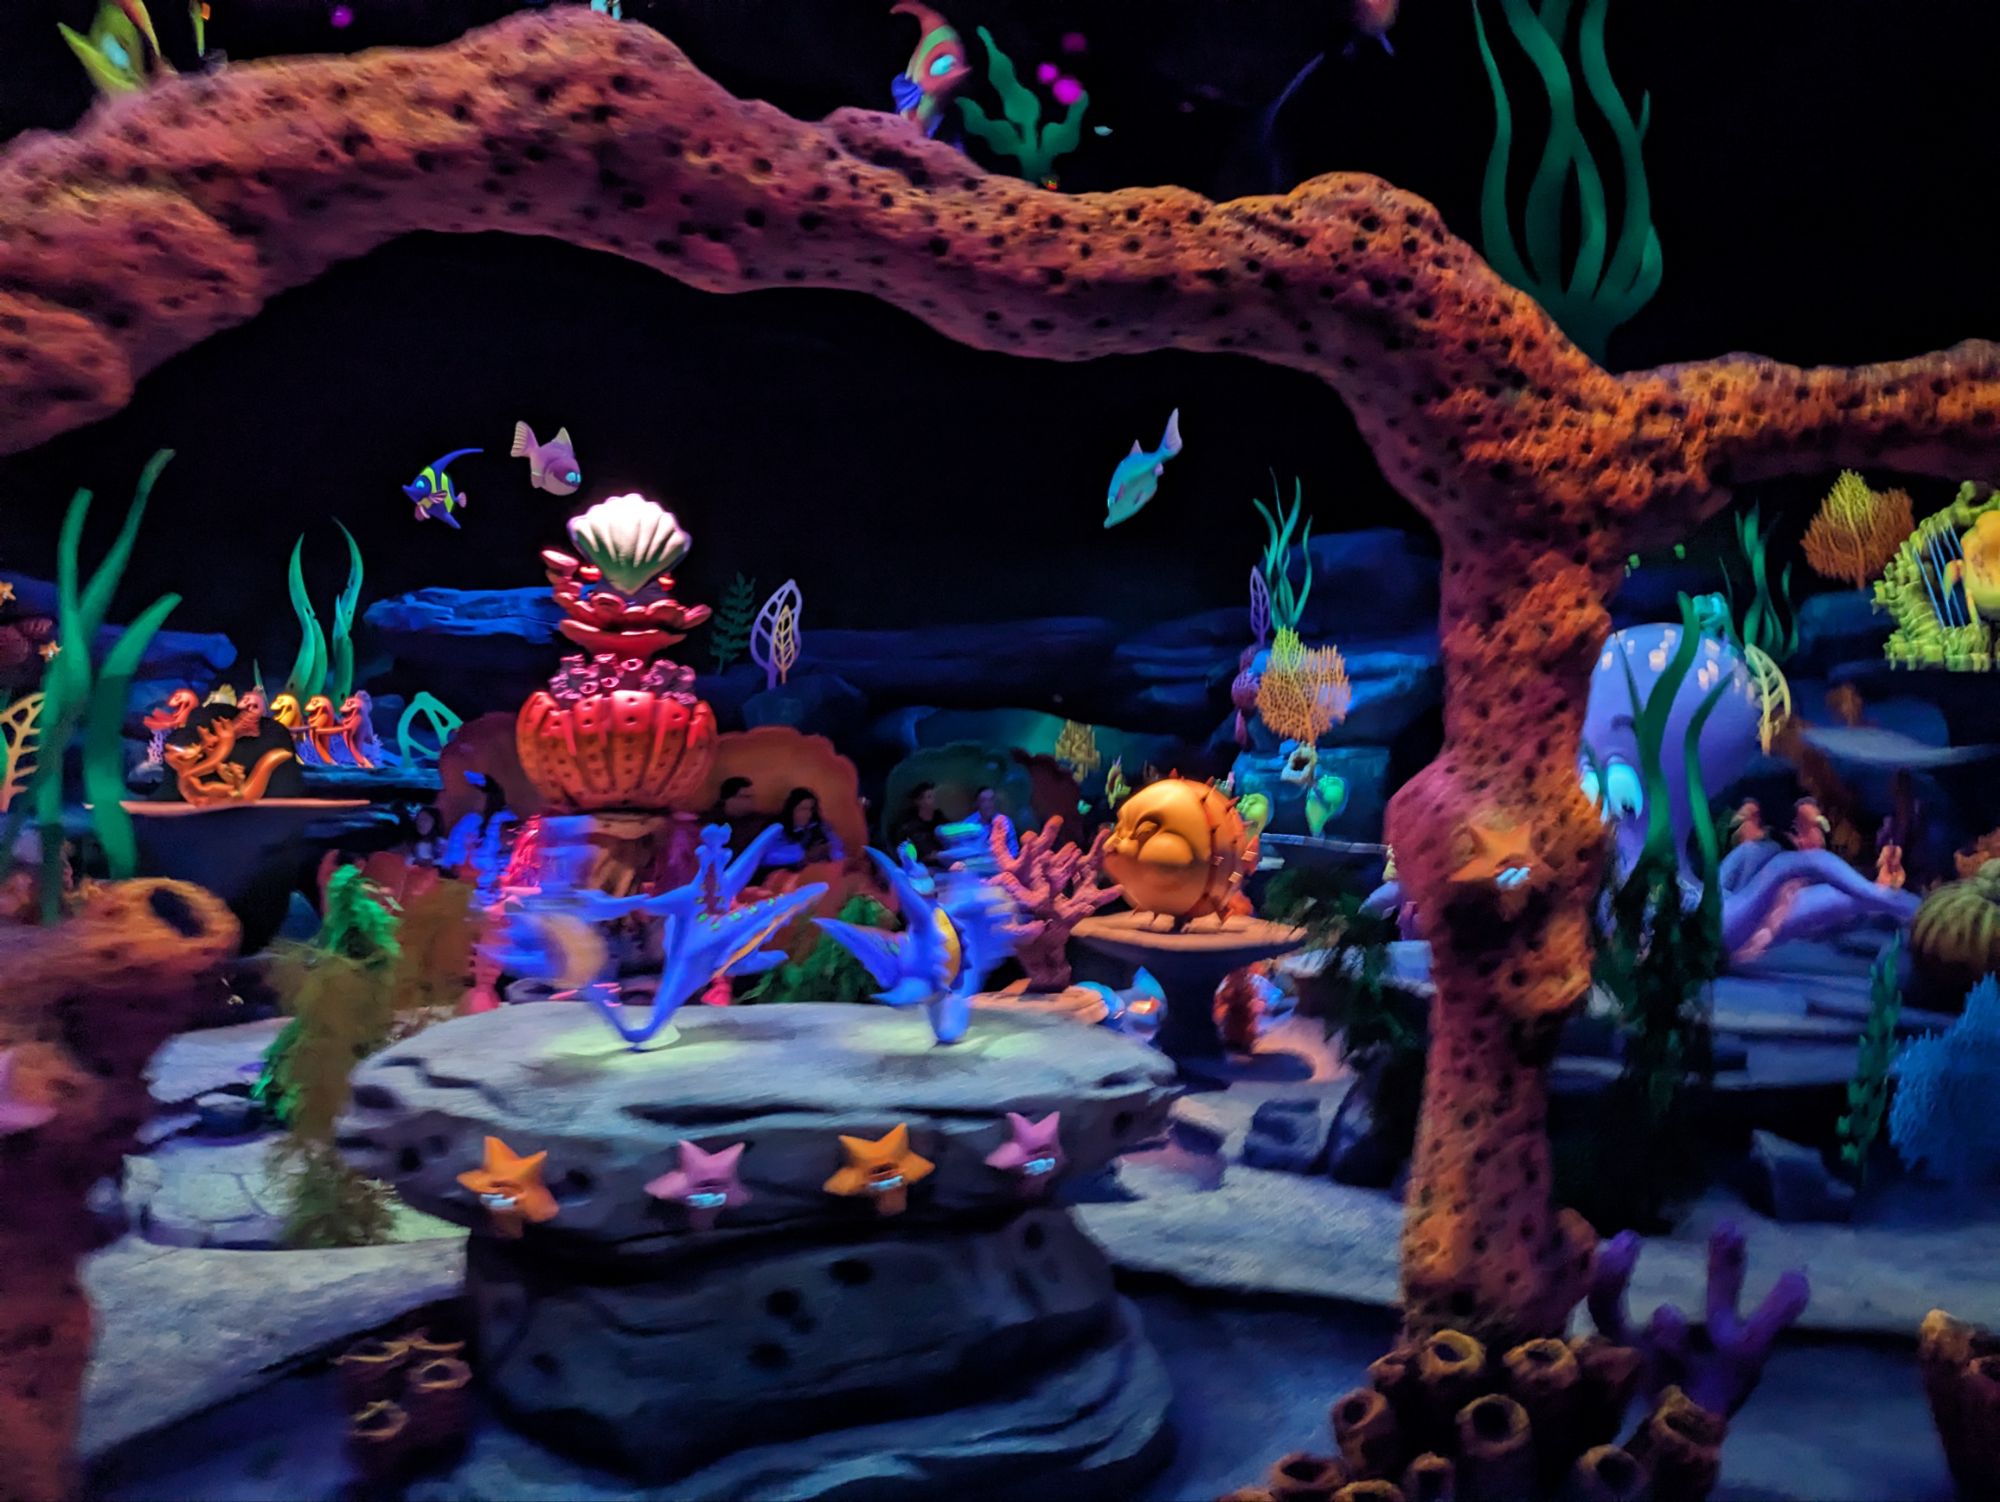 Little Mermaid's Under the Sea scene.